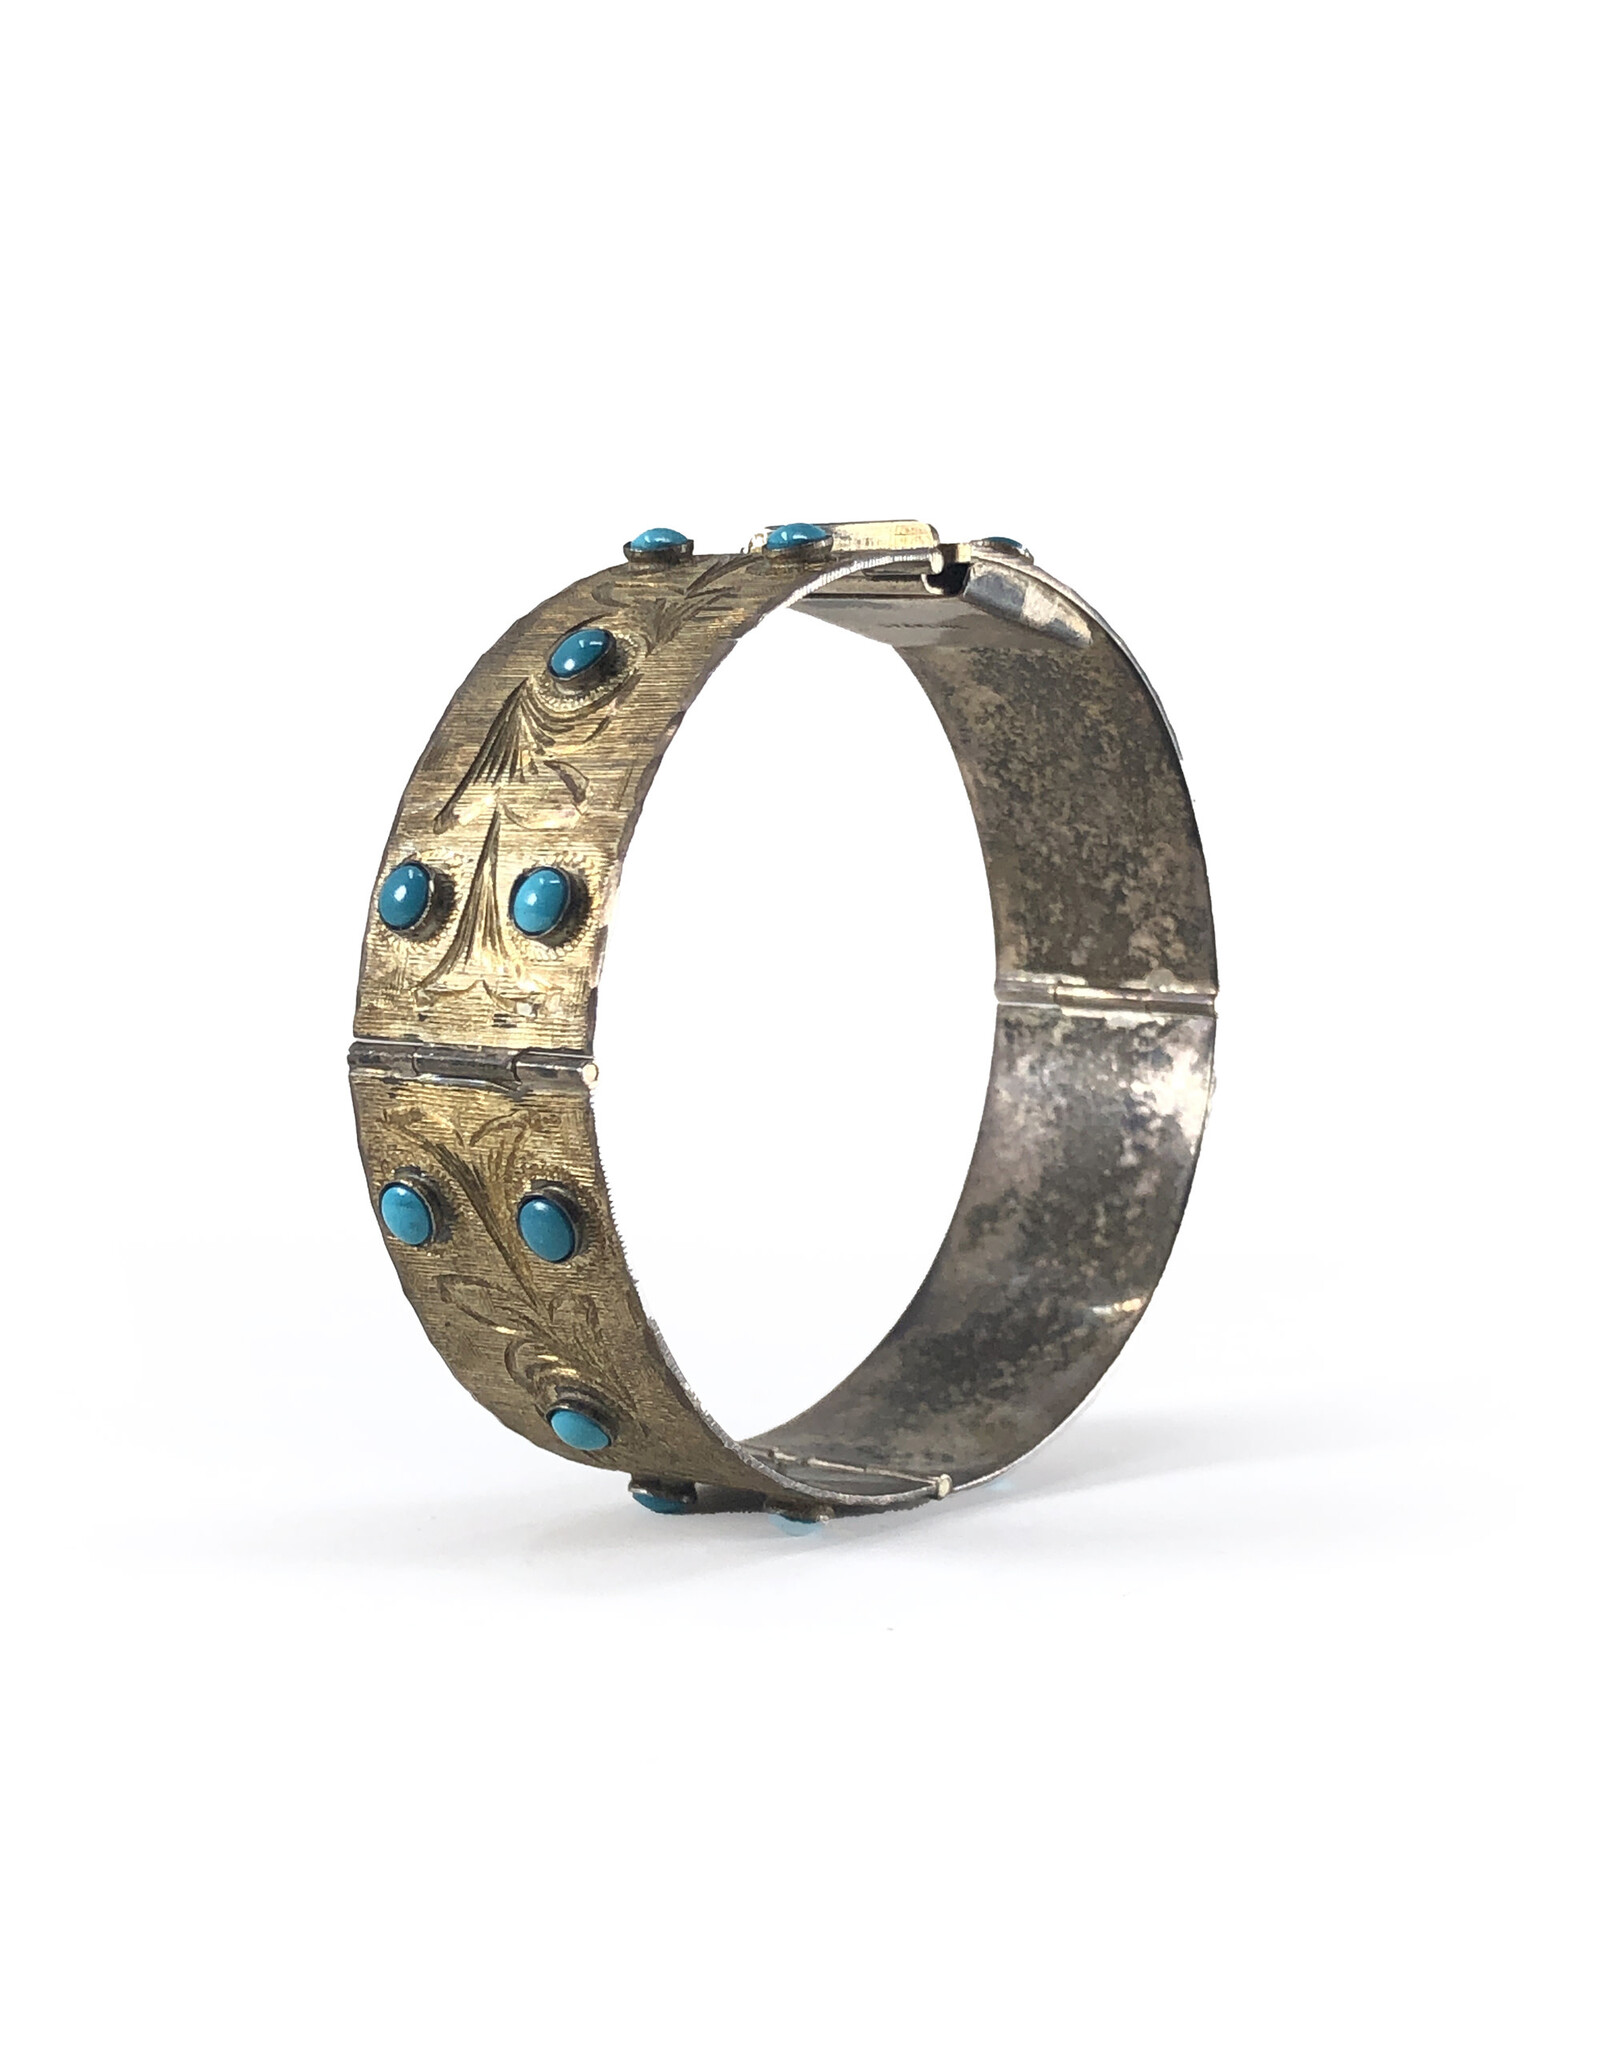 Etched Sterling Turquoise-Studded Panel Bracelet